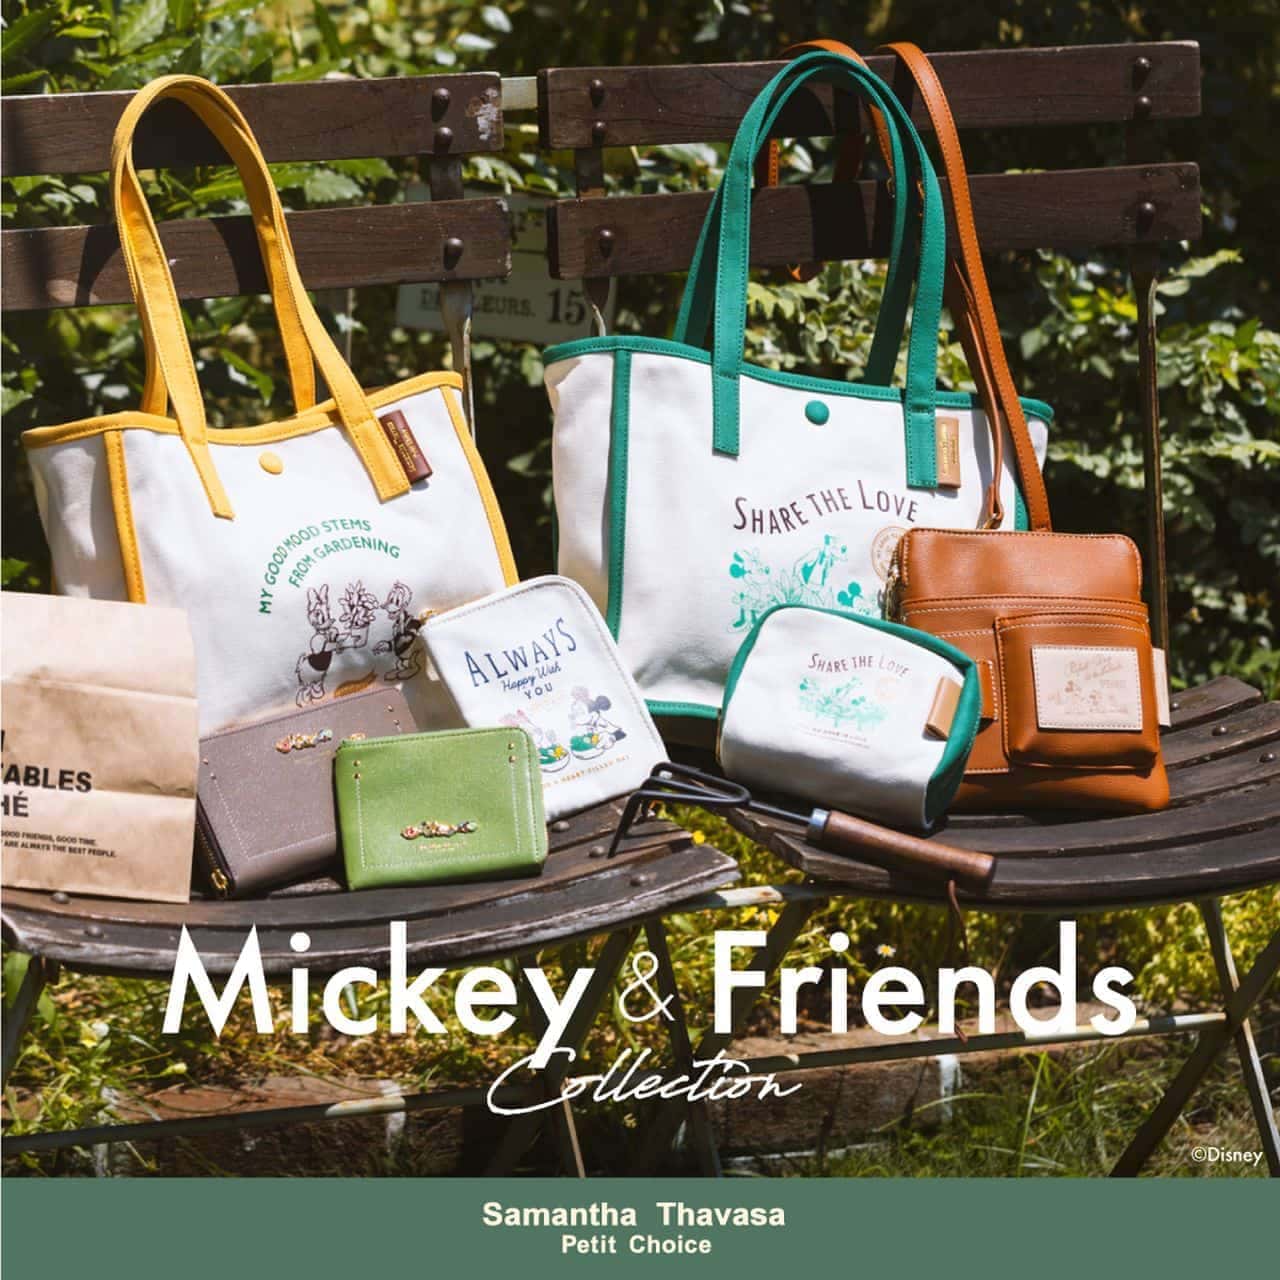 Samantha Thavasa Petit Choice "Mickey & Friends" Collection